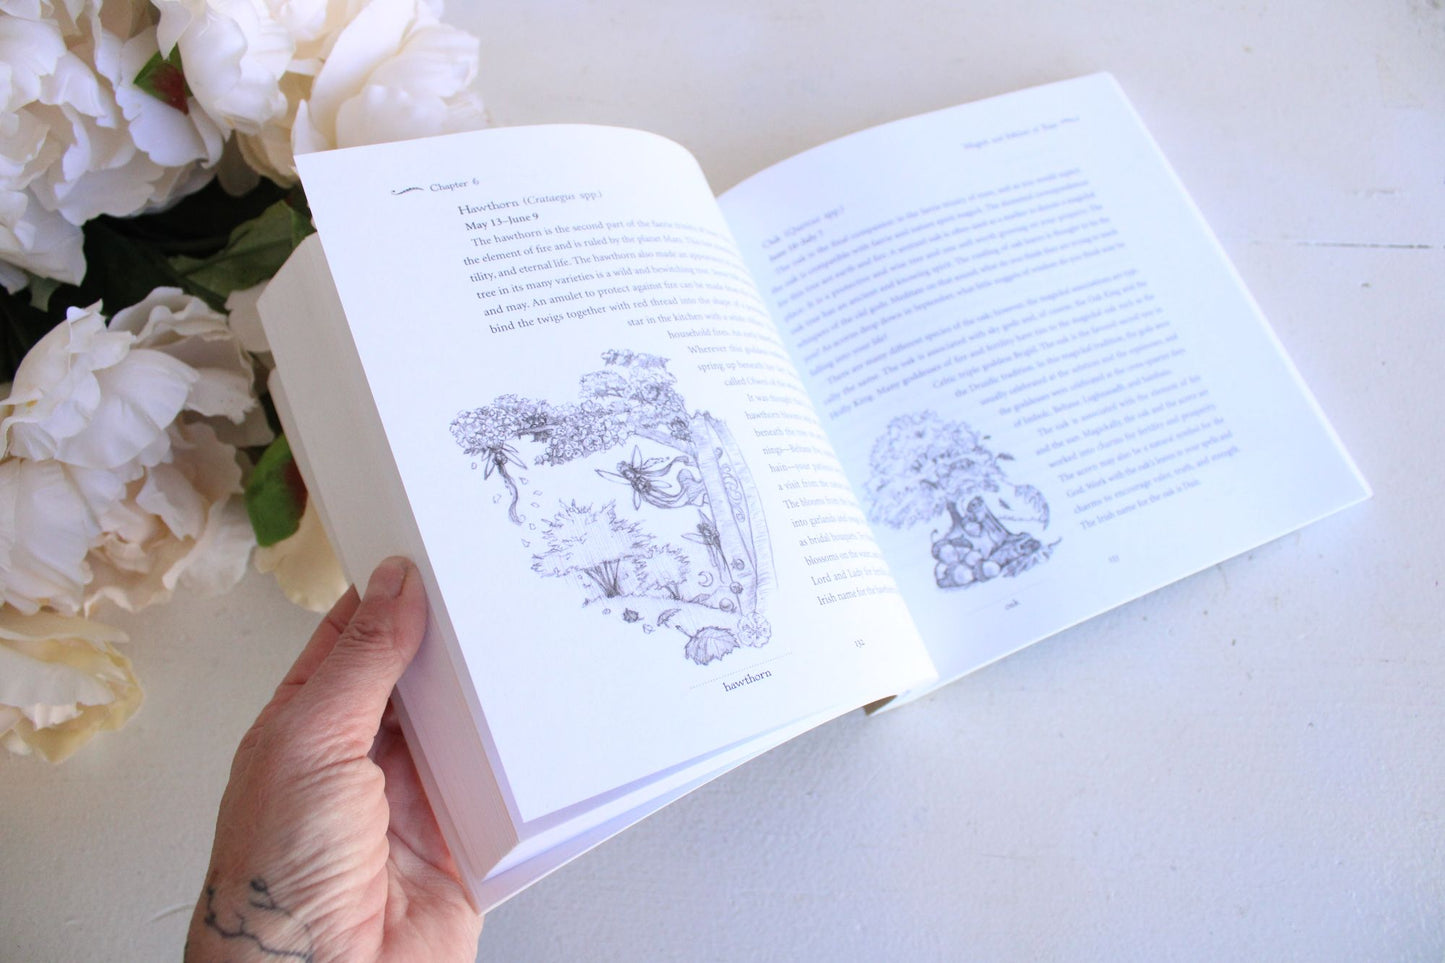 Book, "A Garden Witch's Herbal" by Ellen Dugan, Llewellyn Publications, 2009